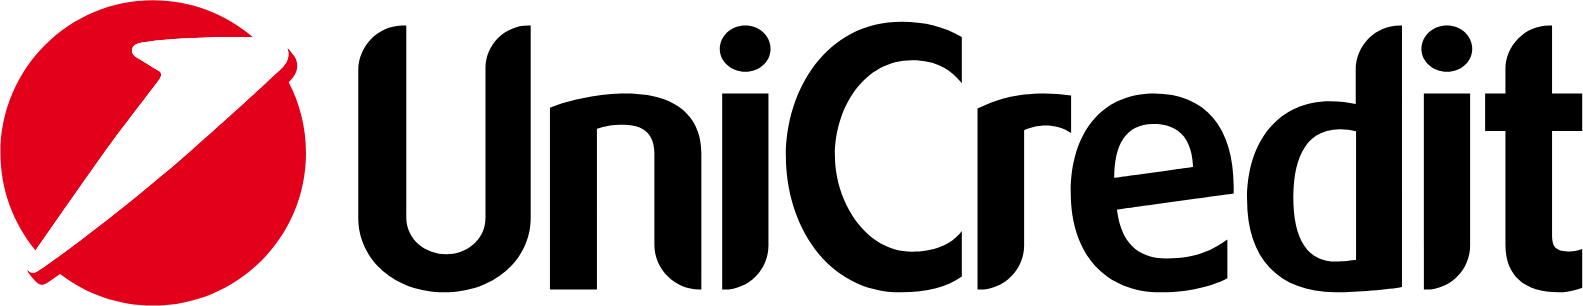 UniCredit logo large (transparent PNG)